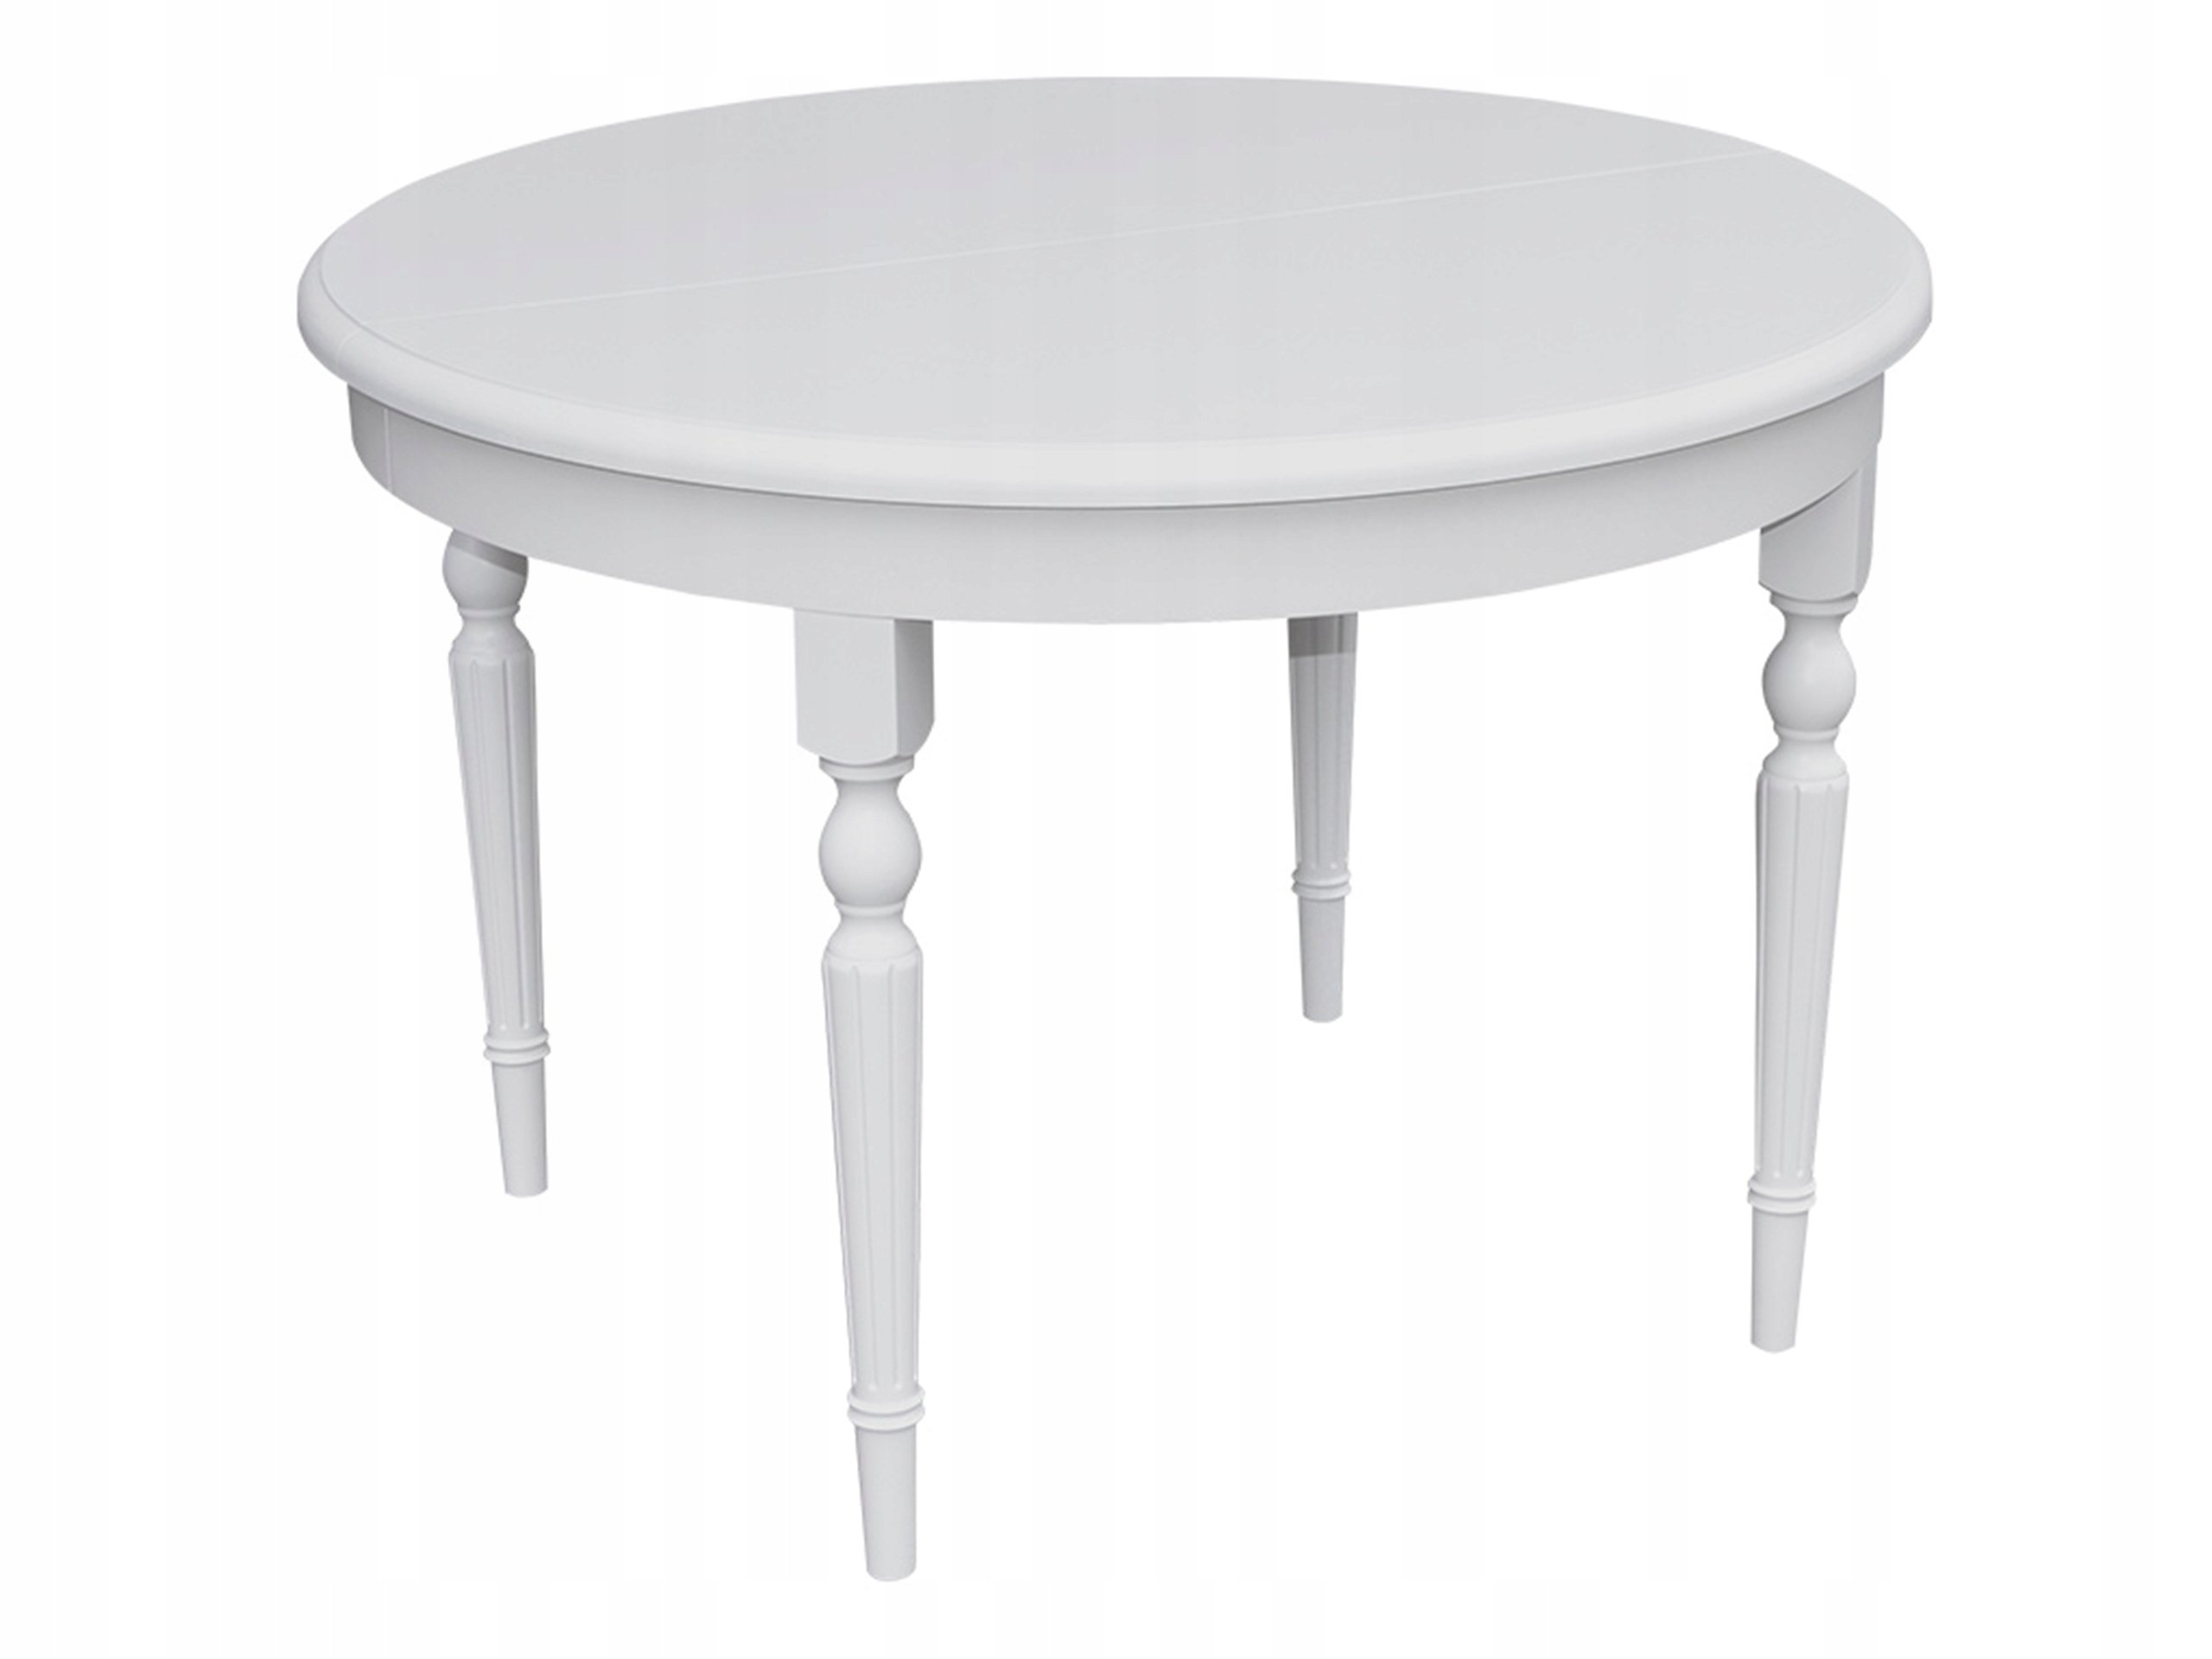 Кухонный стол 80 см. Hoff круглый стол 110. Круглый стол икеа белый. Стол Элегант белый раздвижной 110. Стол икеа белый кухонный круглый раздвижной.